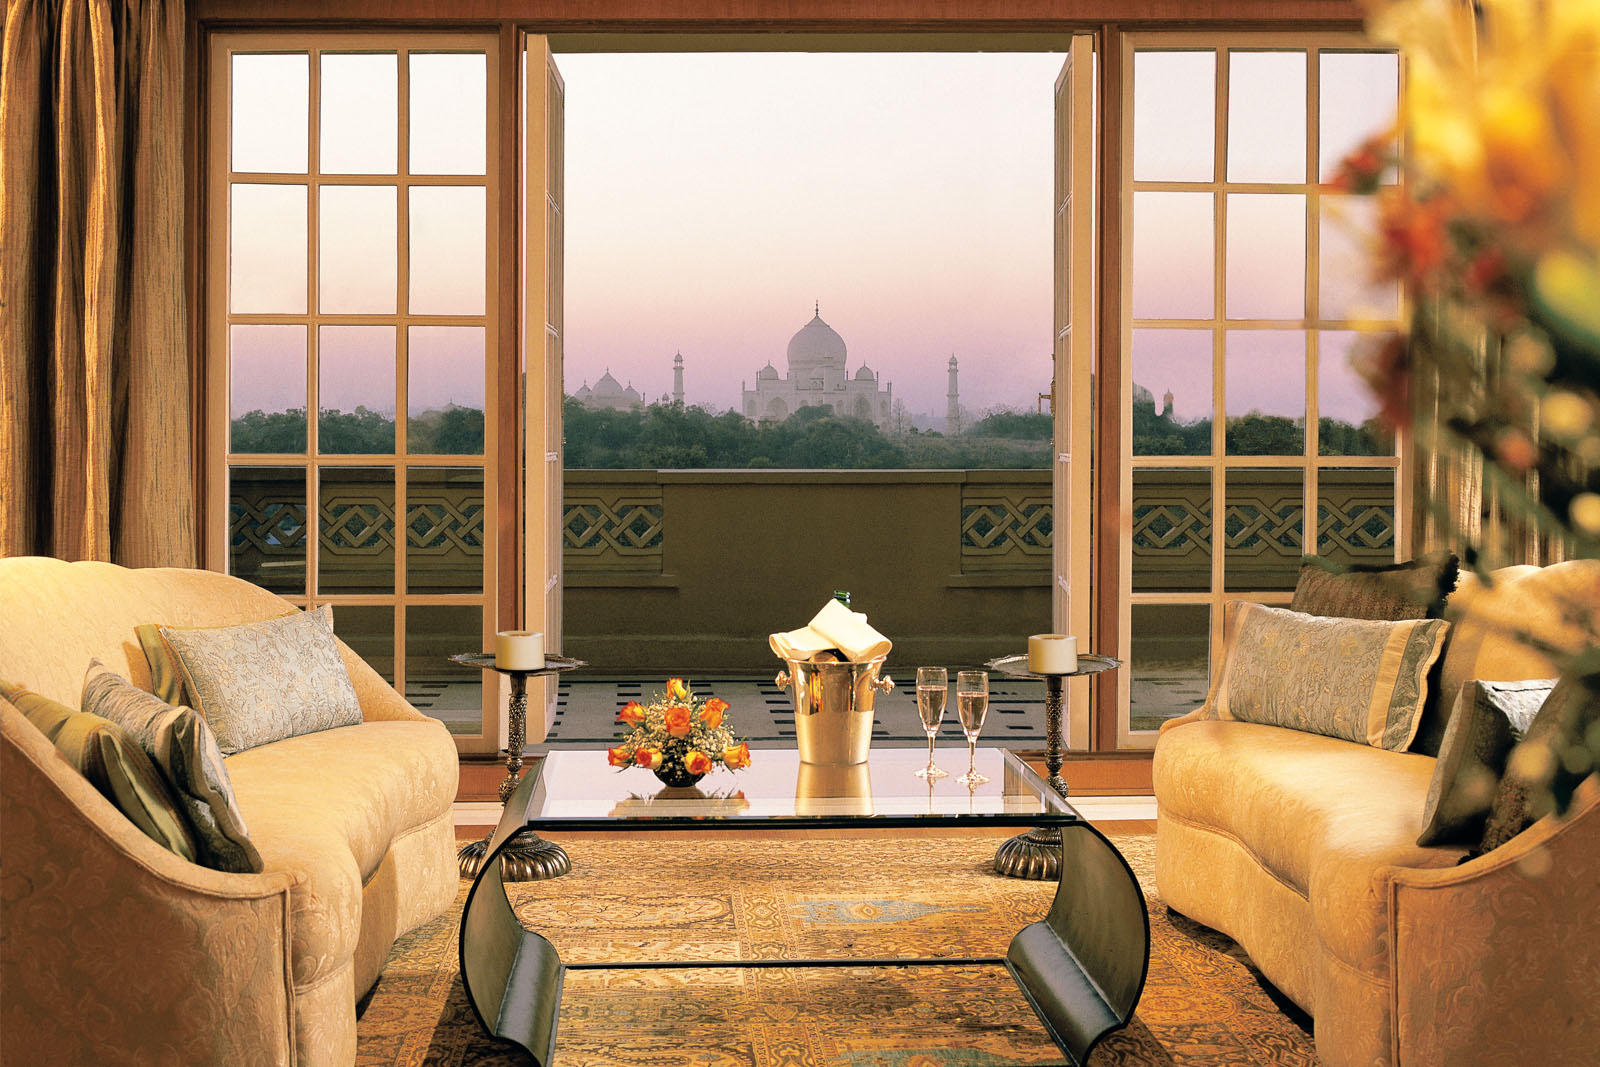 Living Room, the Kohinoor suite, Agra, India